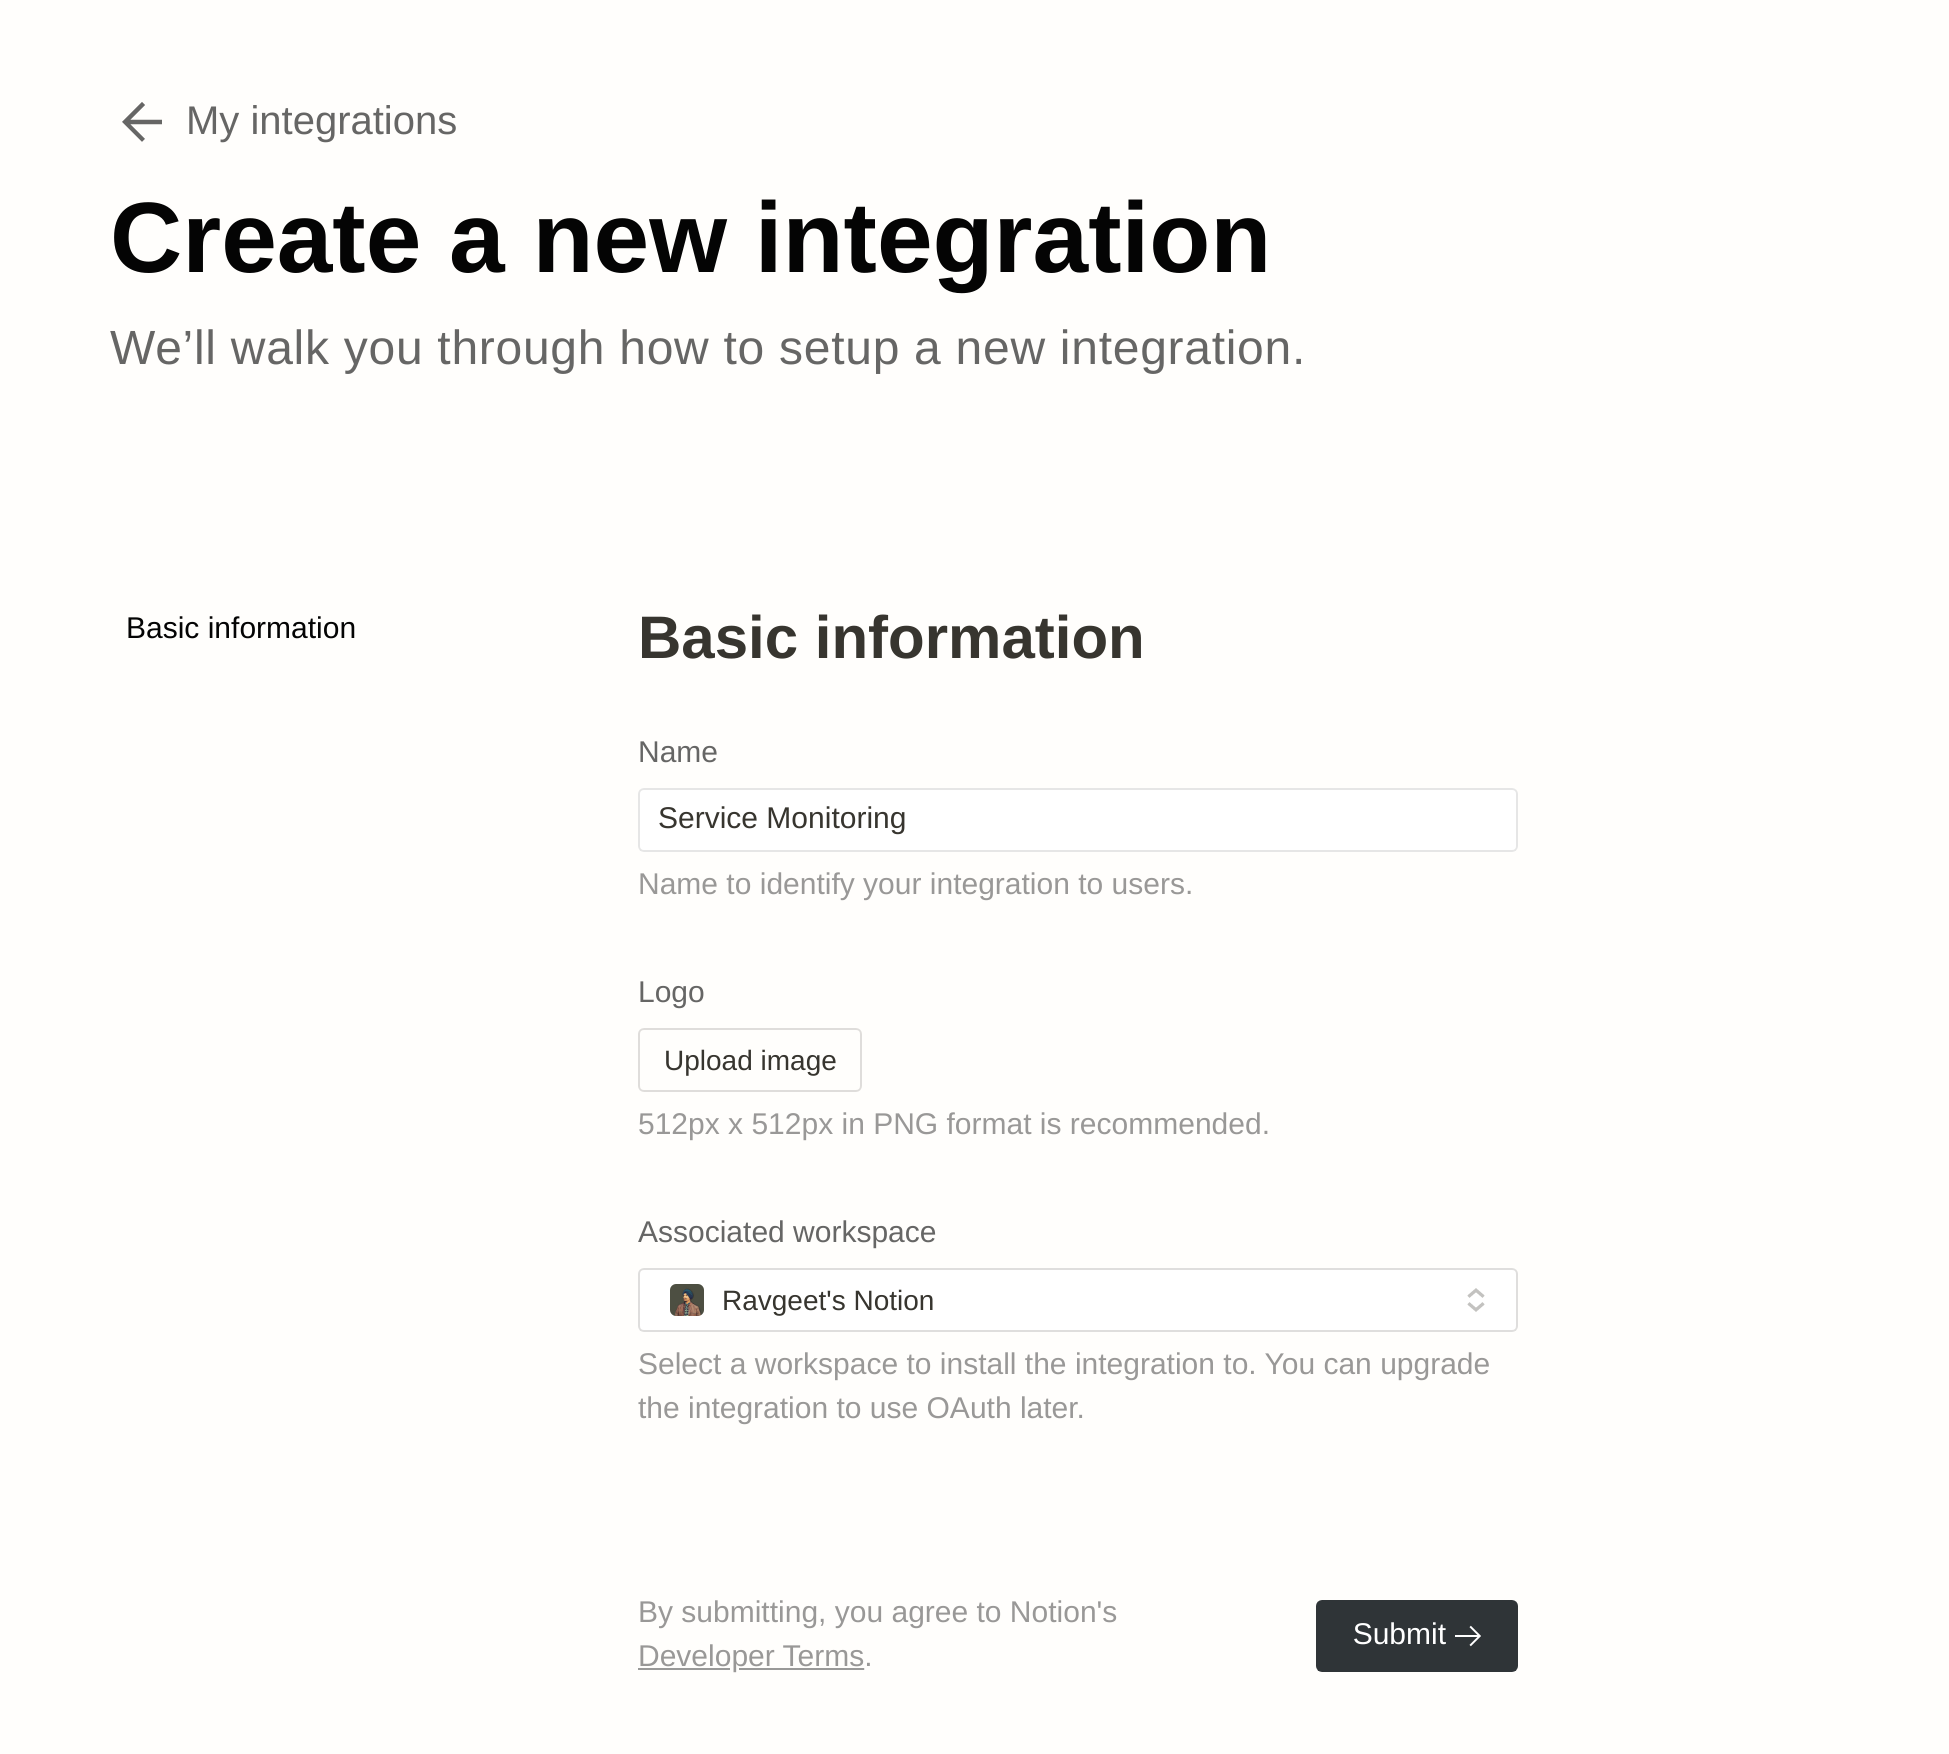 A screenshot of the Notion integration setup page